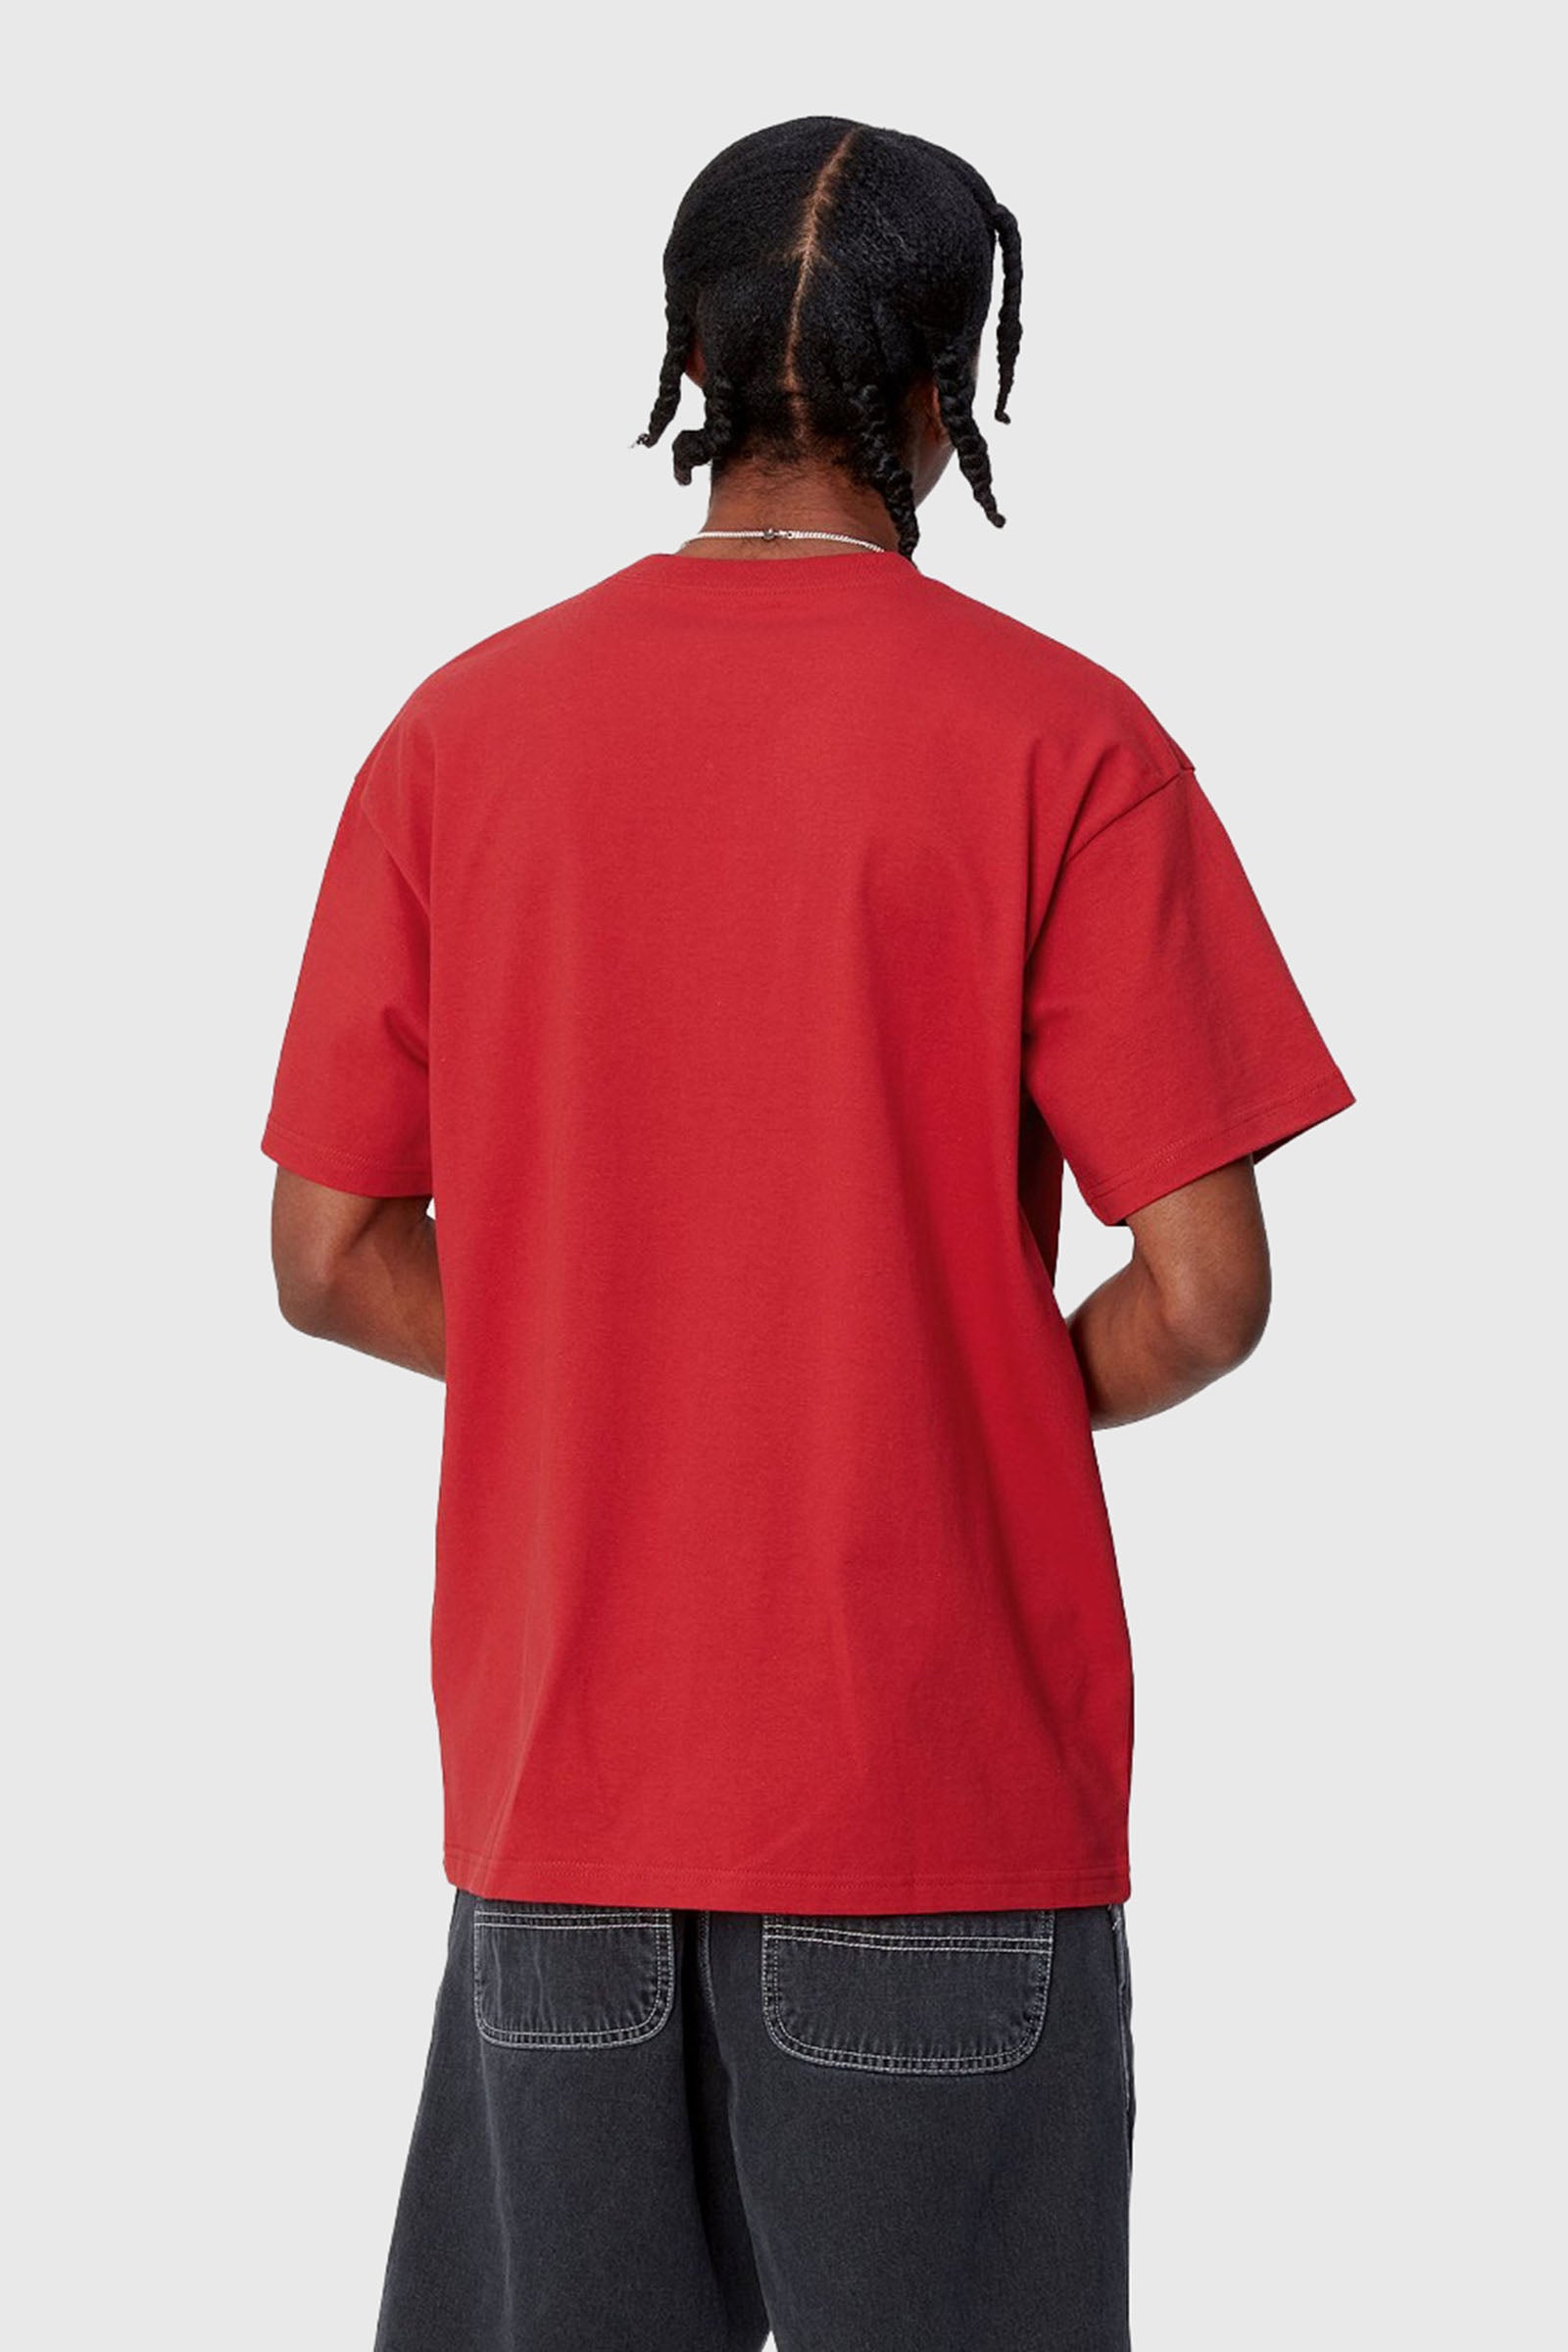 Carhartt WIP T-Shirt S/S Smart Sports Cotton Red - 2